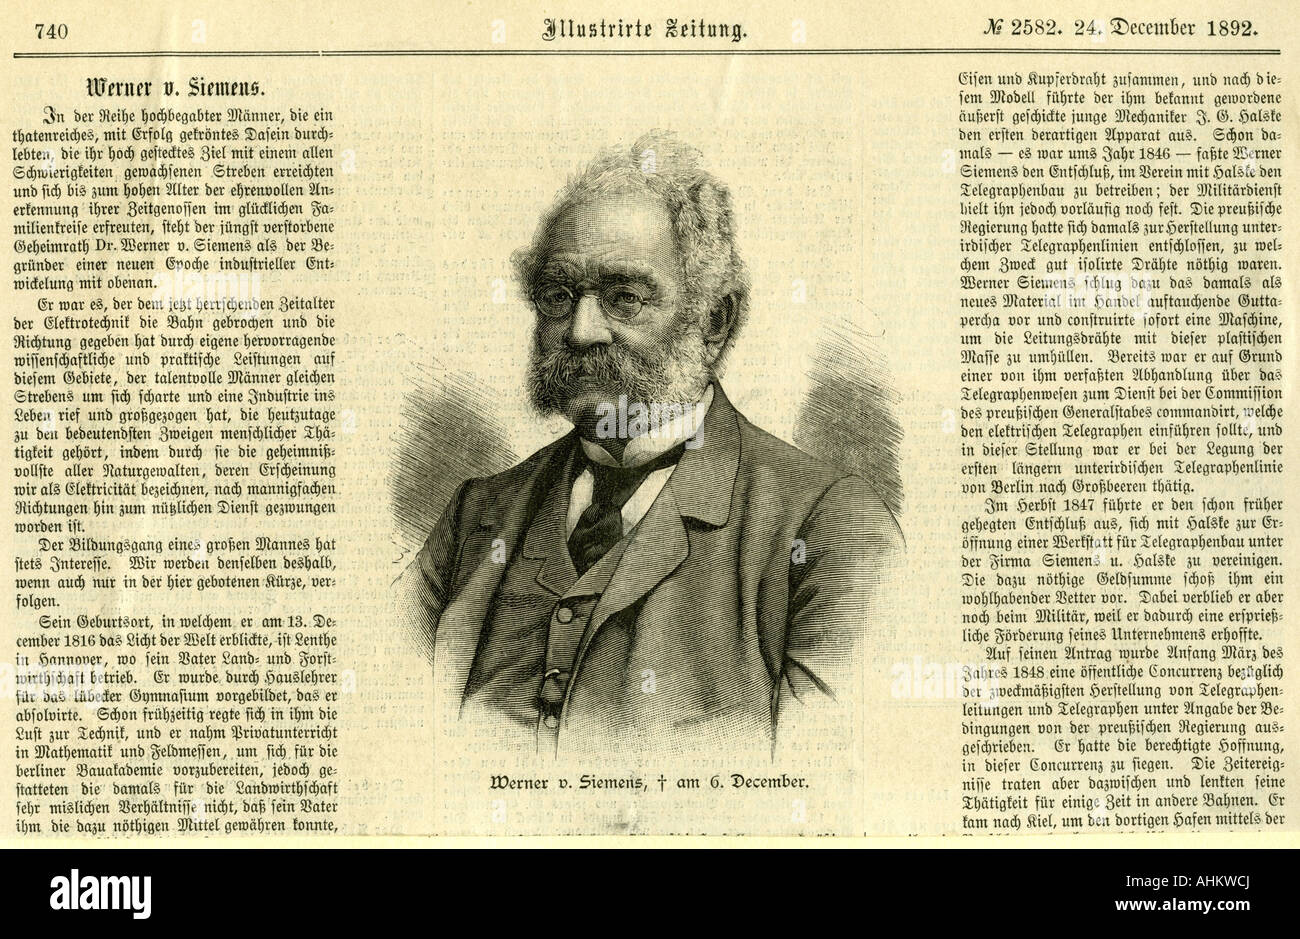 Siemens, Werner von, 13.3.1816 - 6.12.1892, empresario e inventor alemán, retrato, grabado, Leipziger Illustrierte Zeitung, 24.12.1892, Foto de stock